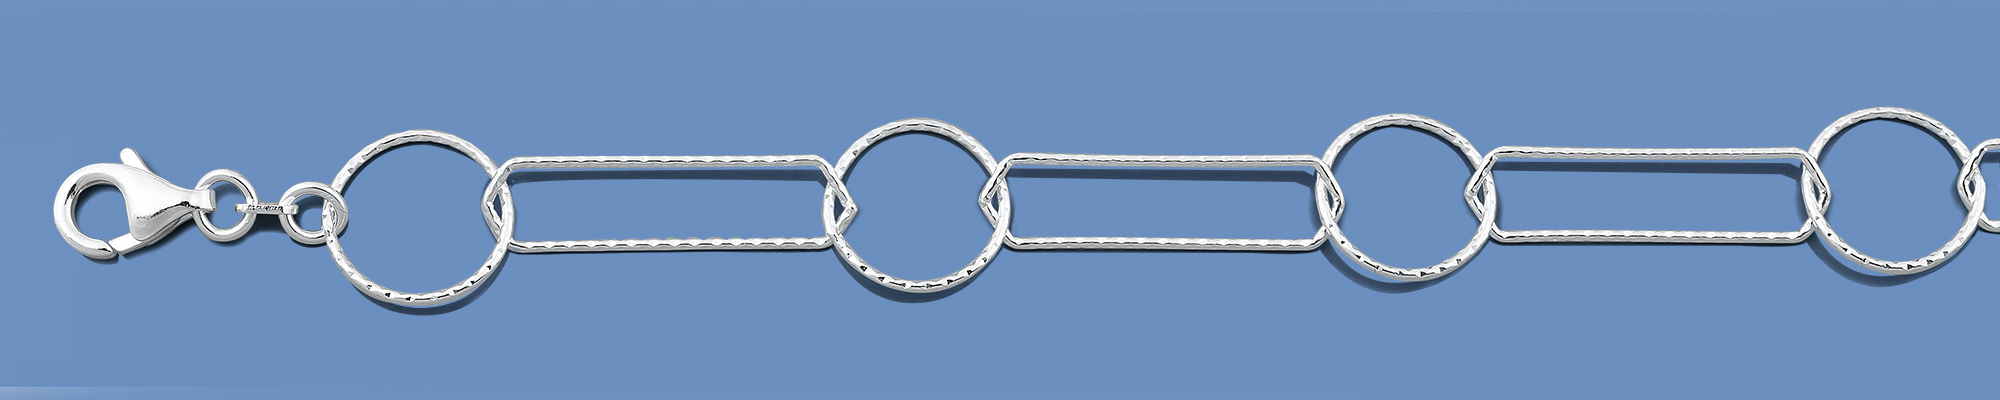 Open Circle Staple Chain